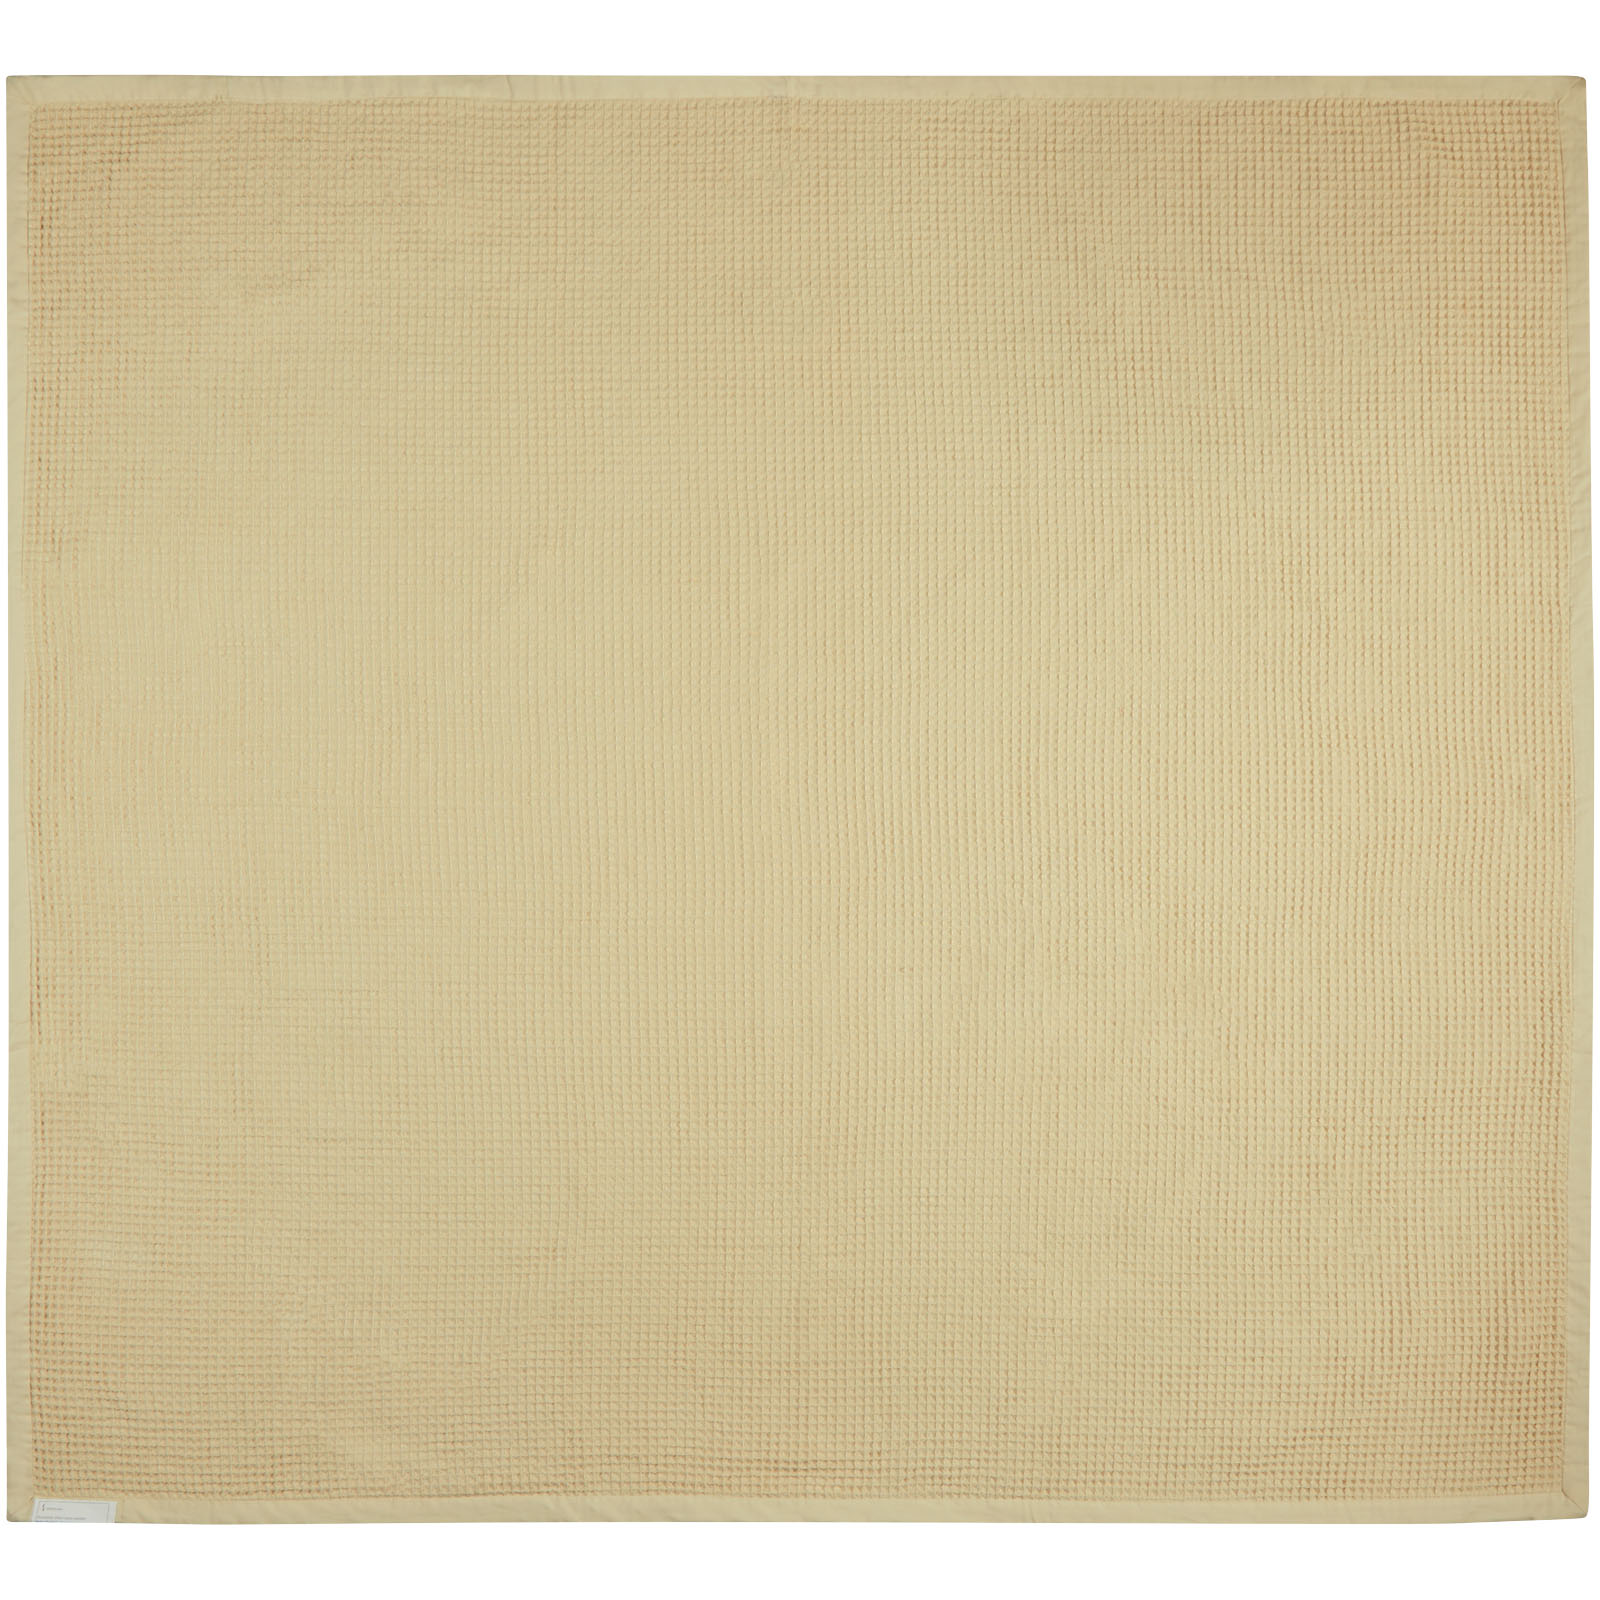 Advertising Blankets - Abele 150 x 140 cm cotton waffle blanket - 1